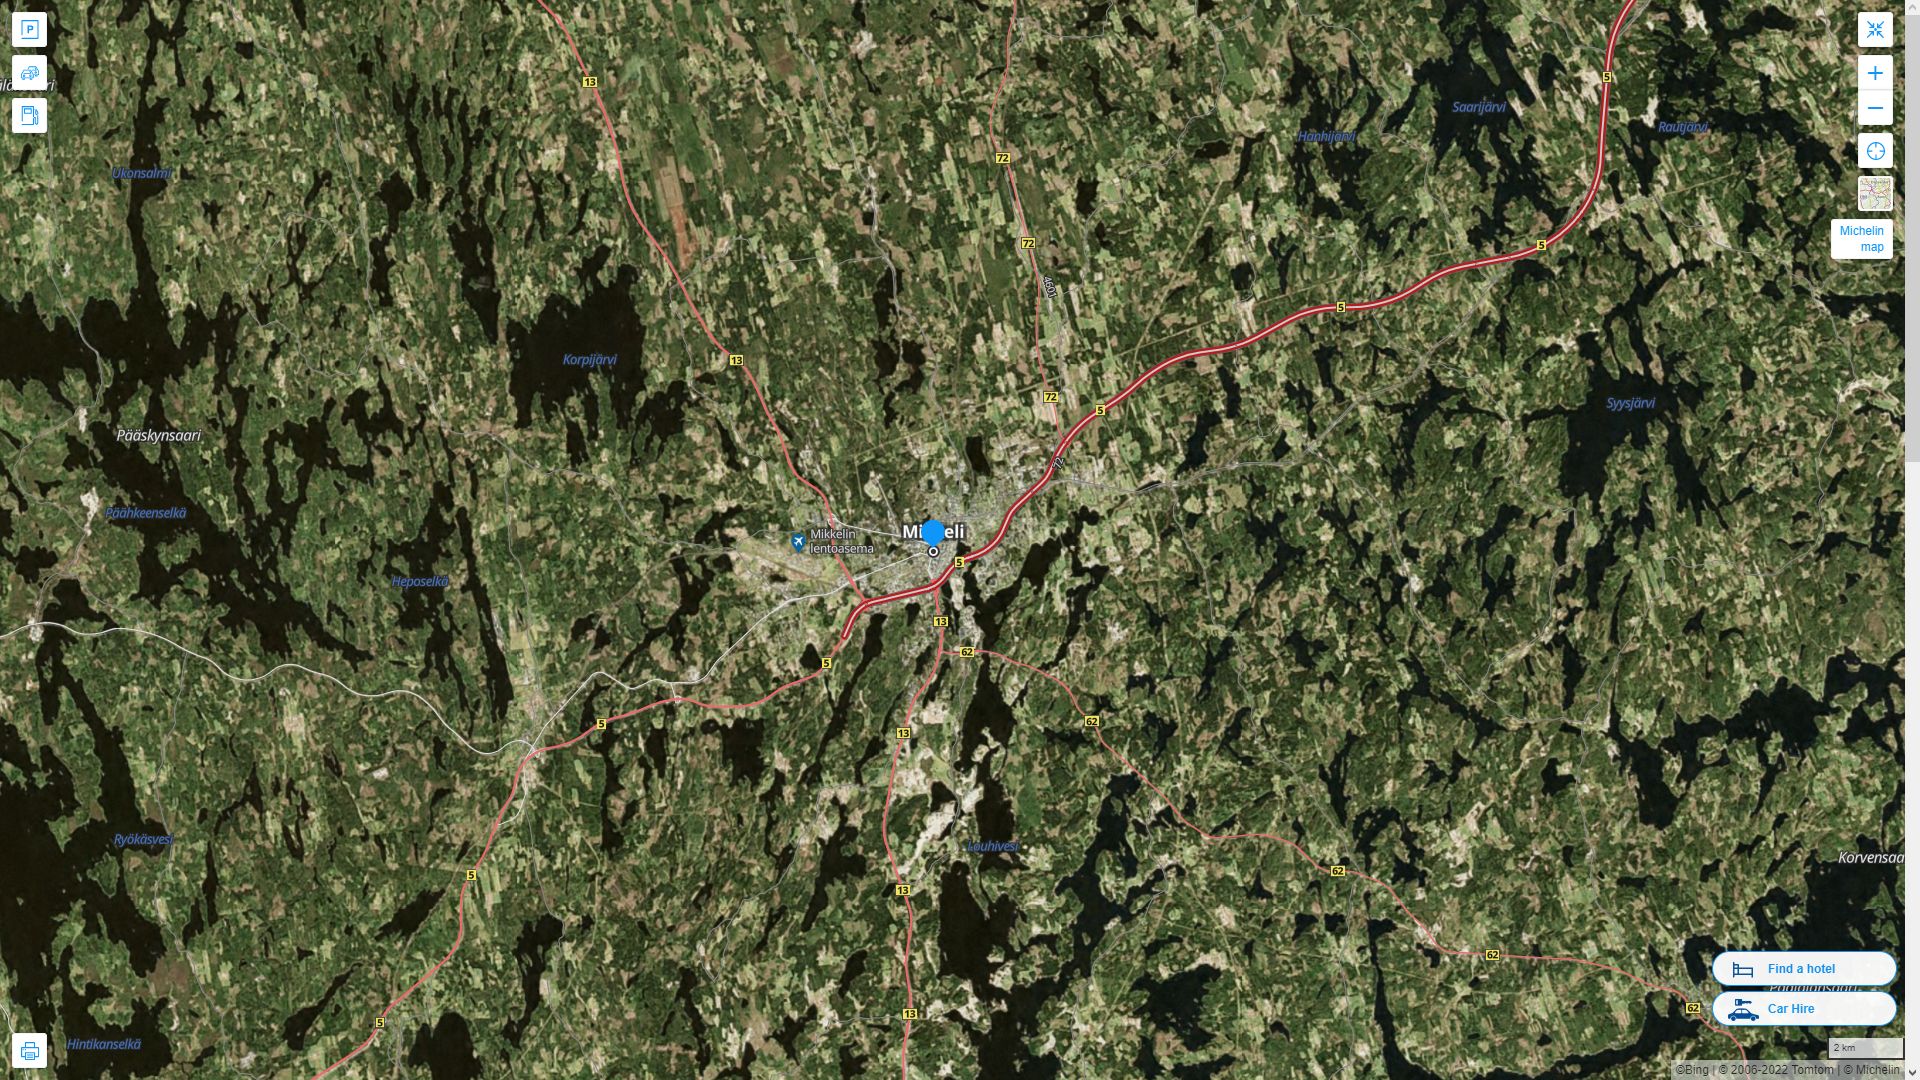 Mikkeli Finlande Autoroute et carte routiere avec vue satellite